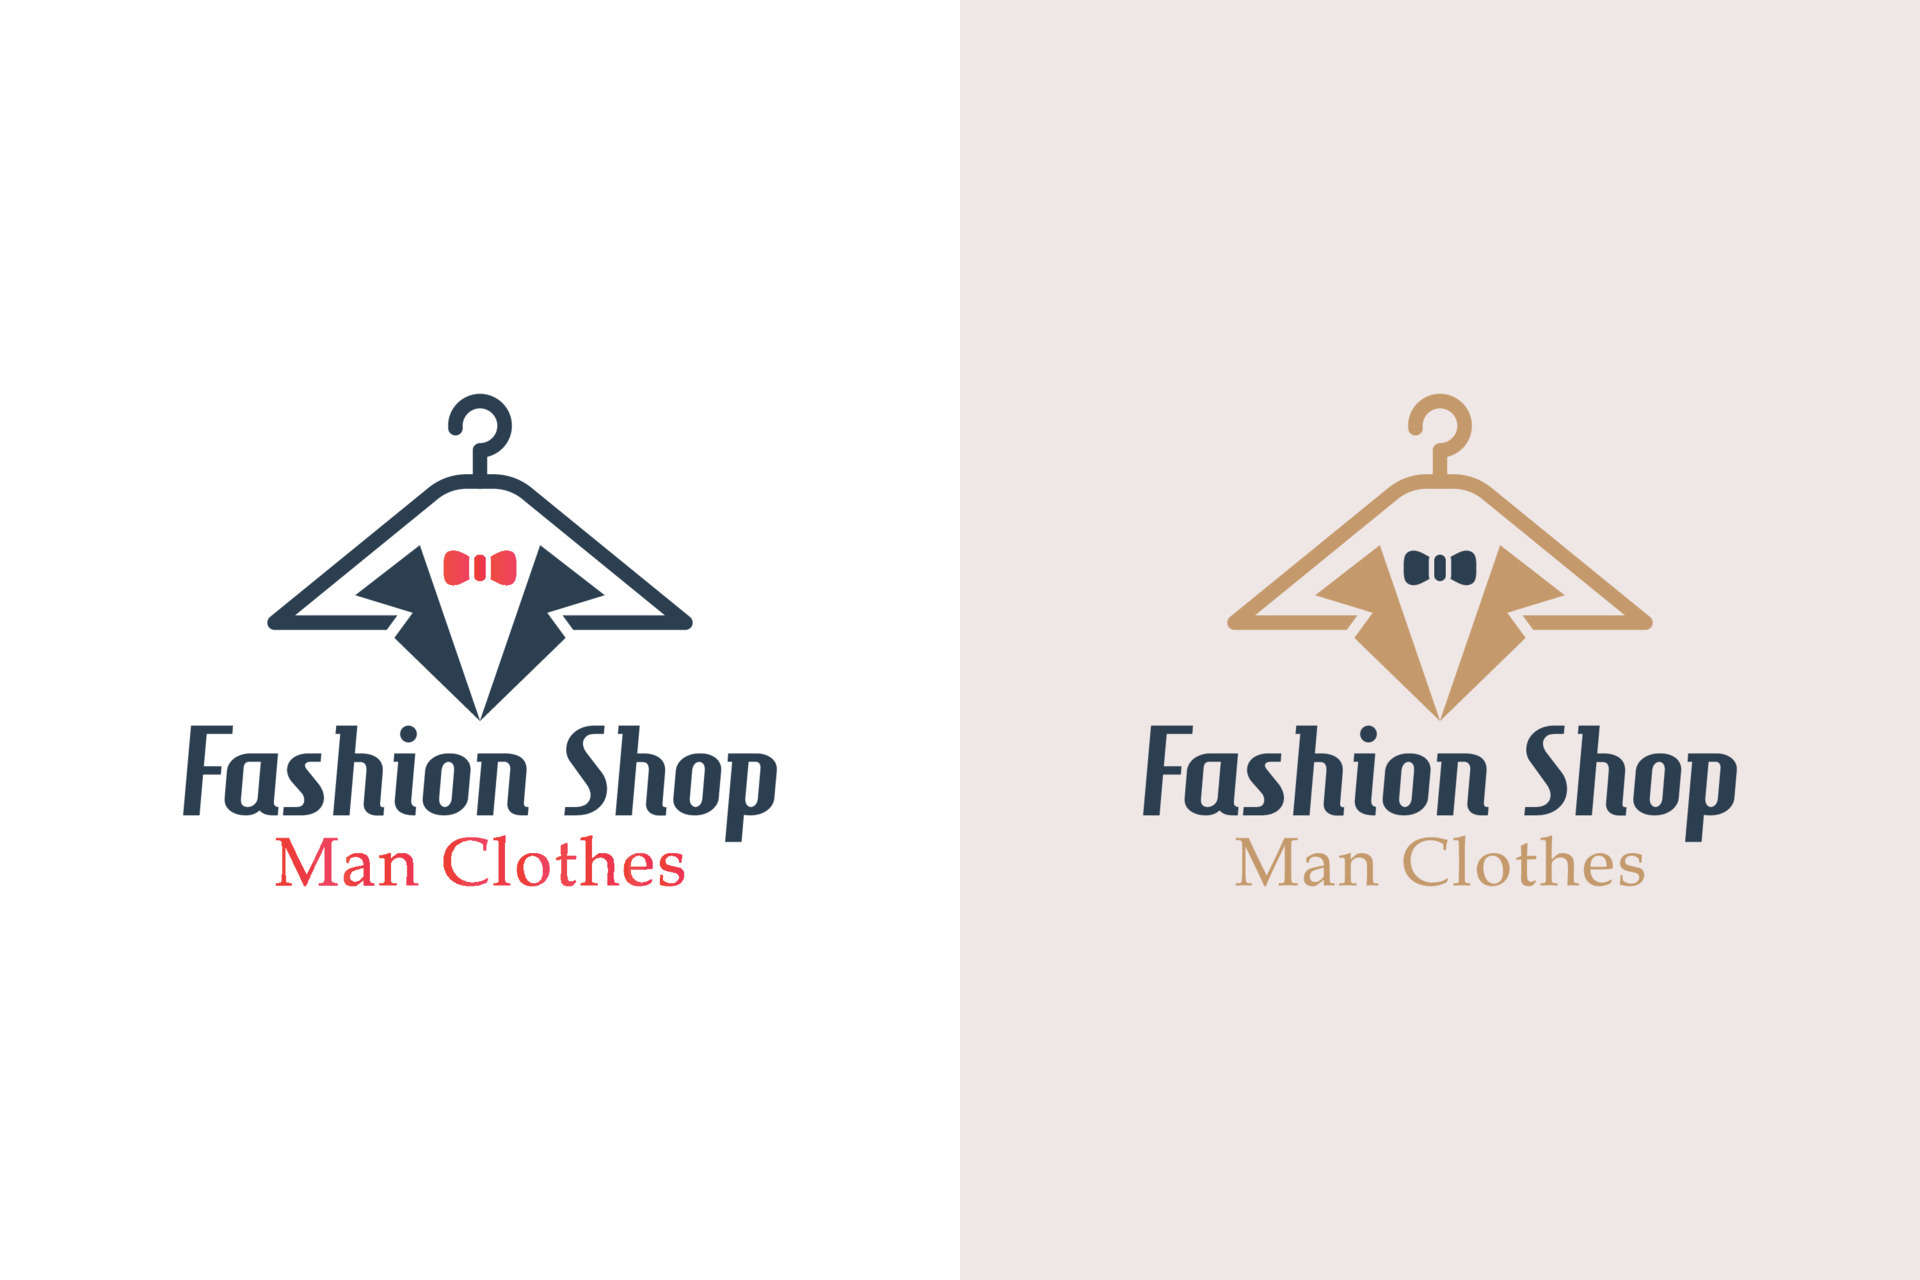 awesome fashion shop logo. tailor man clothes vintage style design ...